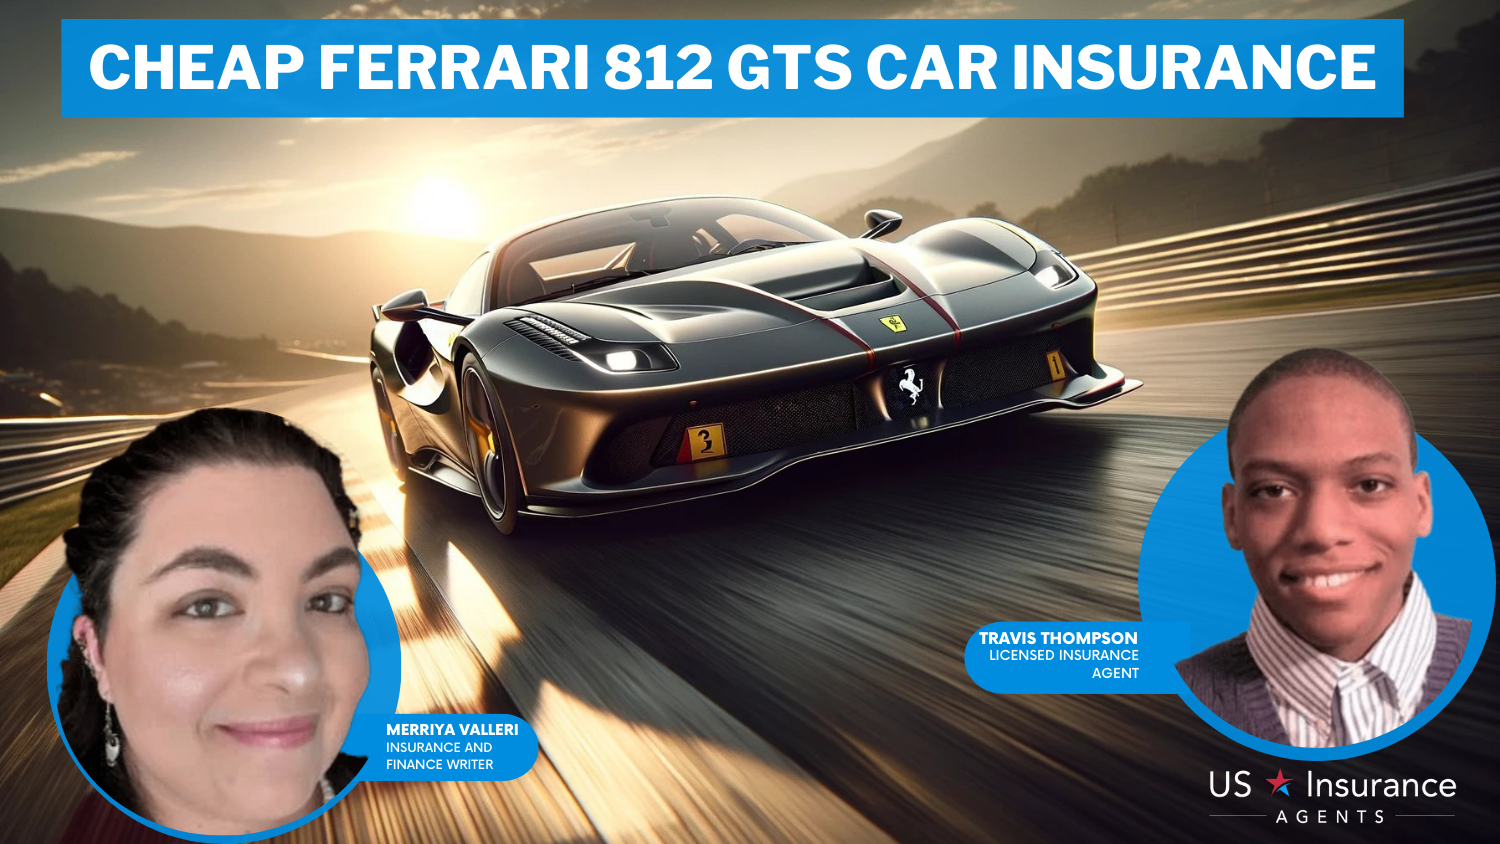 Cheap Ferrari 812 GTS Car Insurance: State Farm, Nationwide, and Liberty Mutual